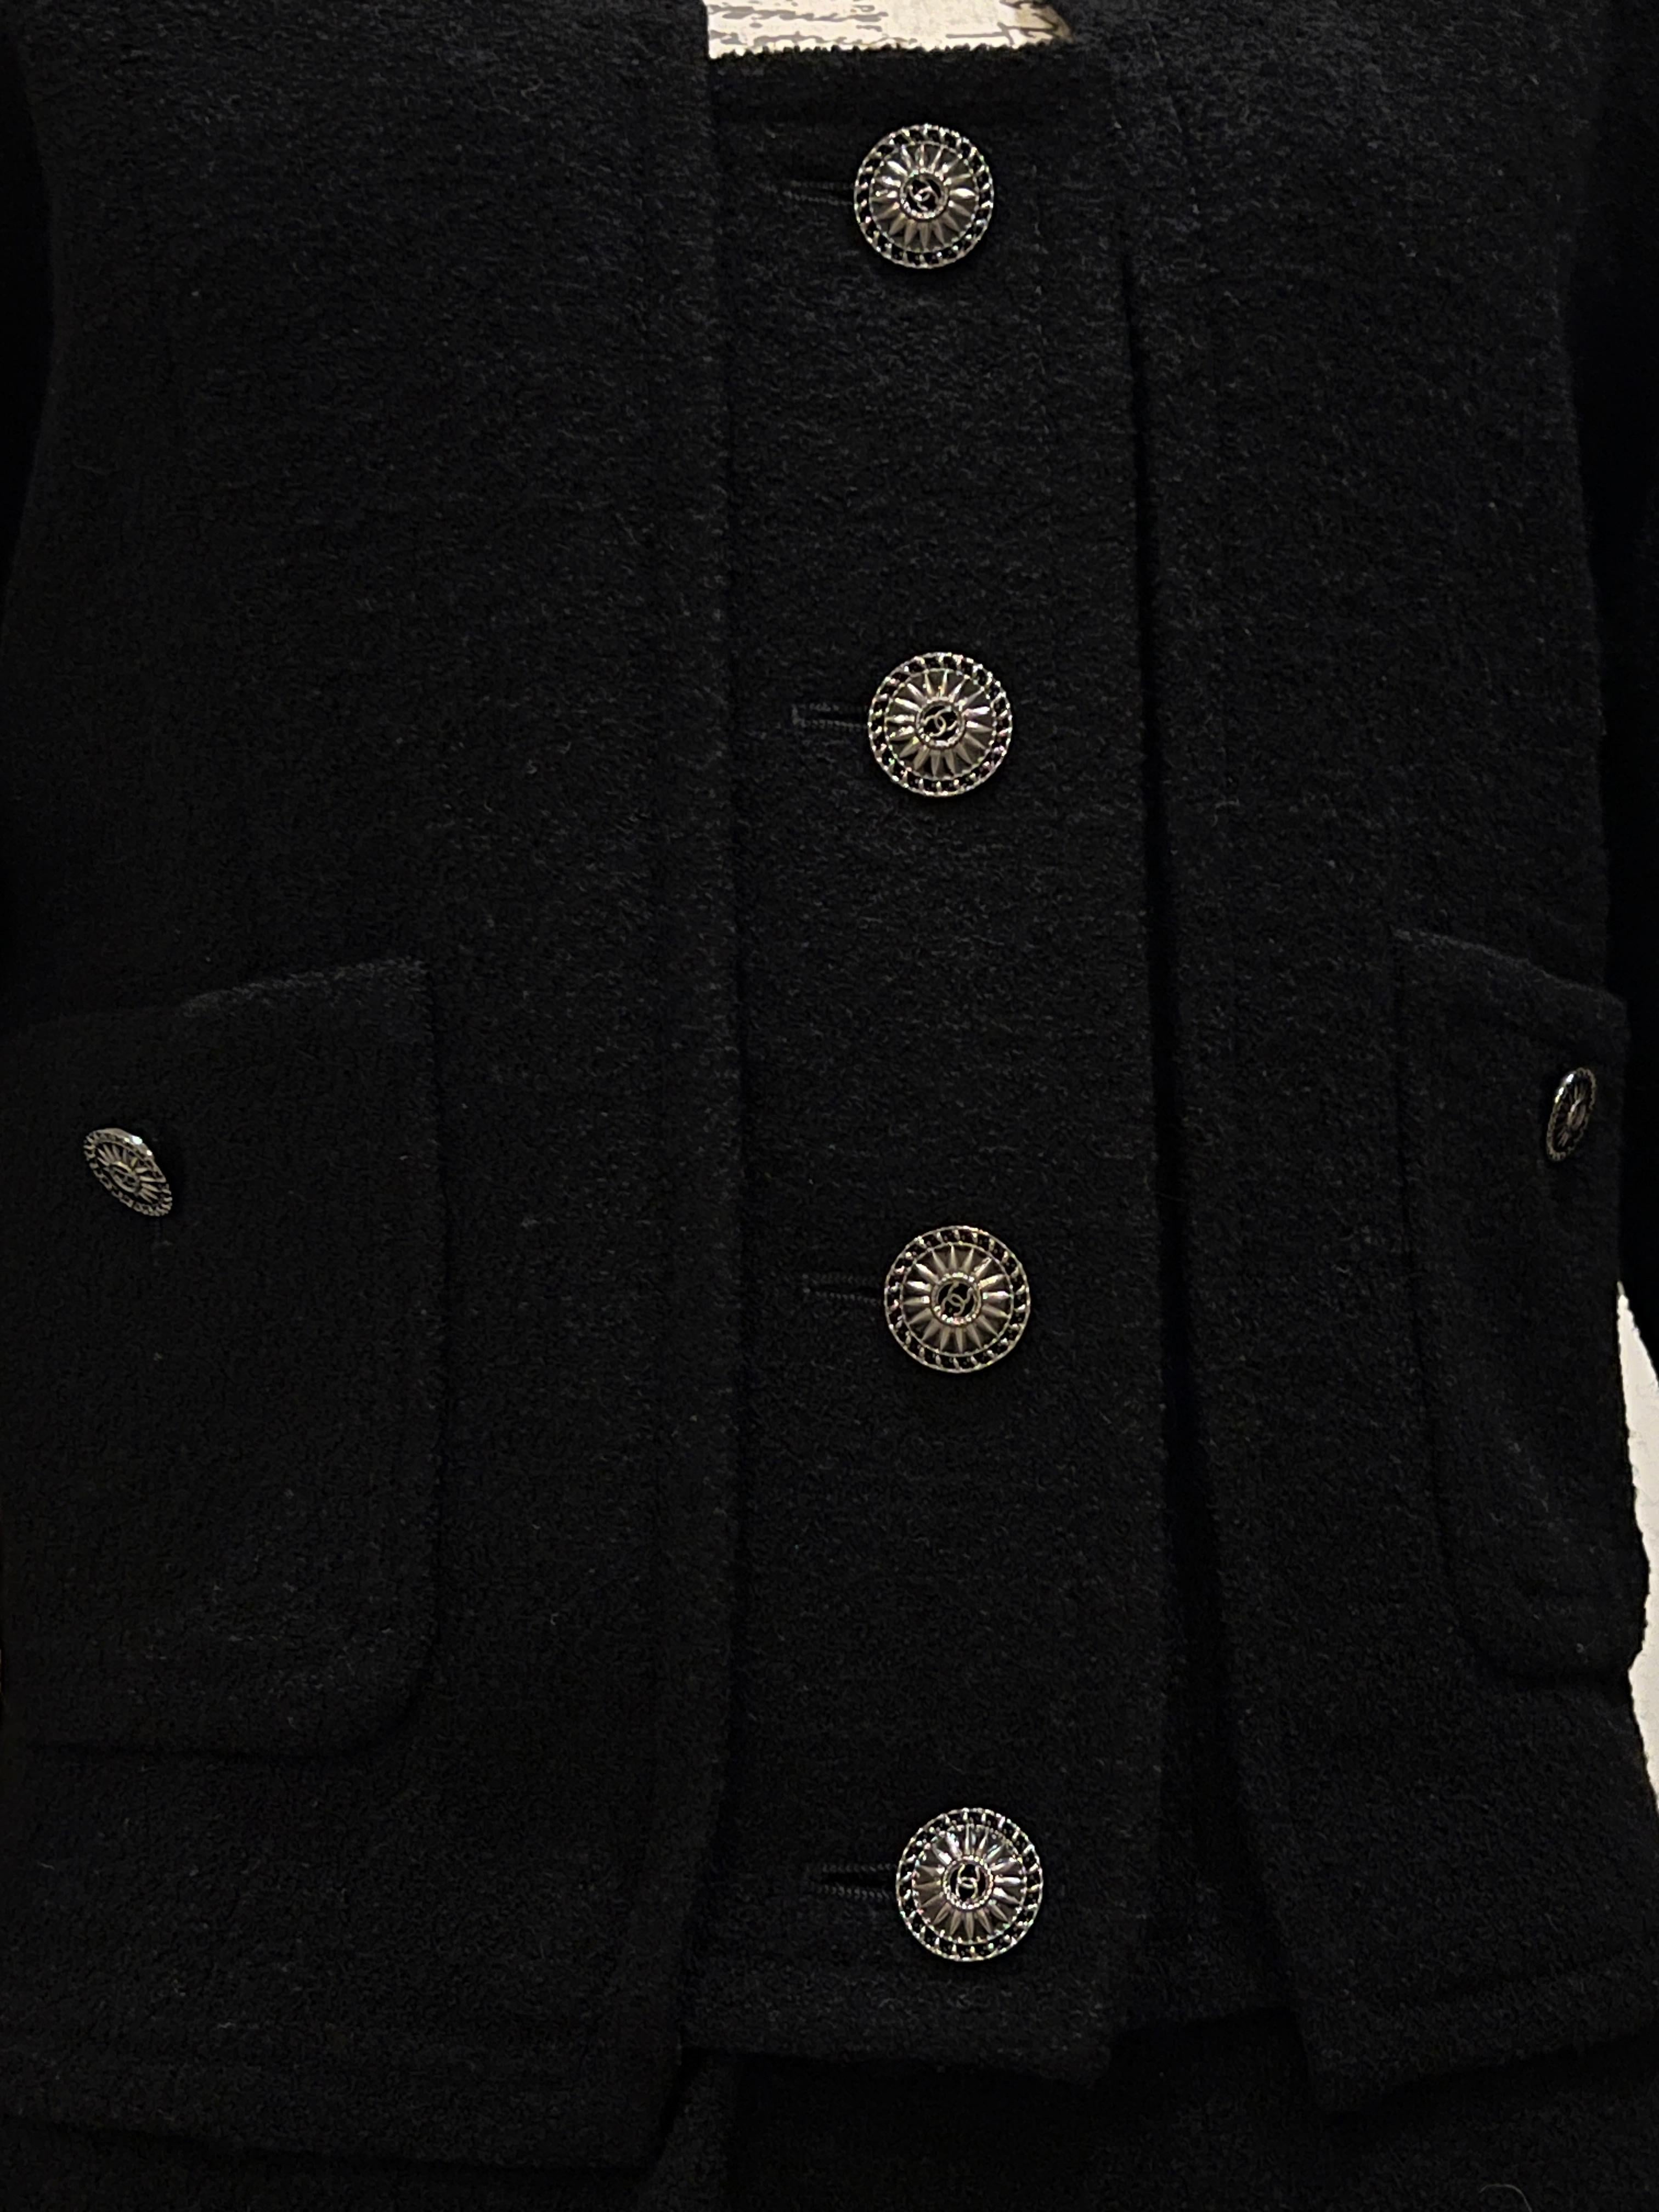 Chanel New Paris / Singapore Black Tweed Jacket and Dress Set 5